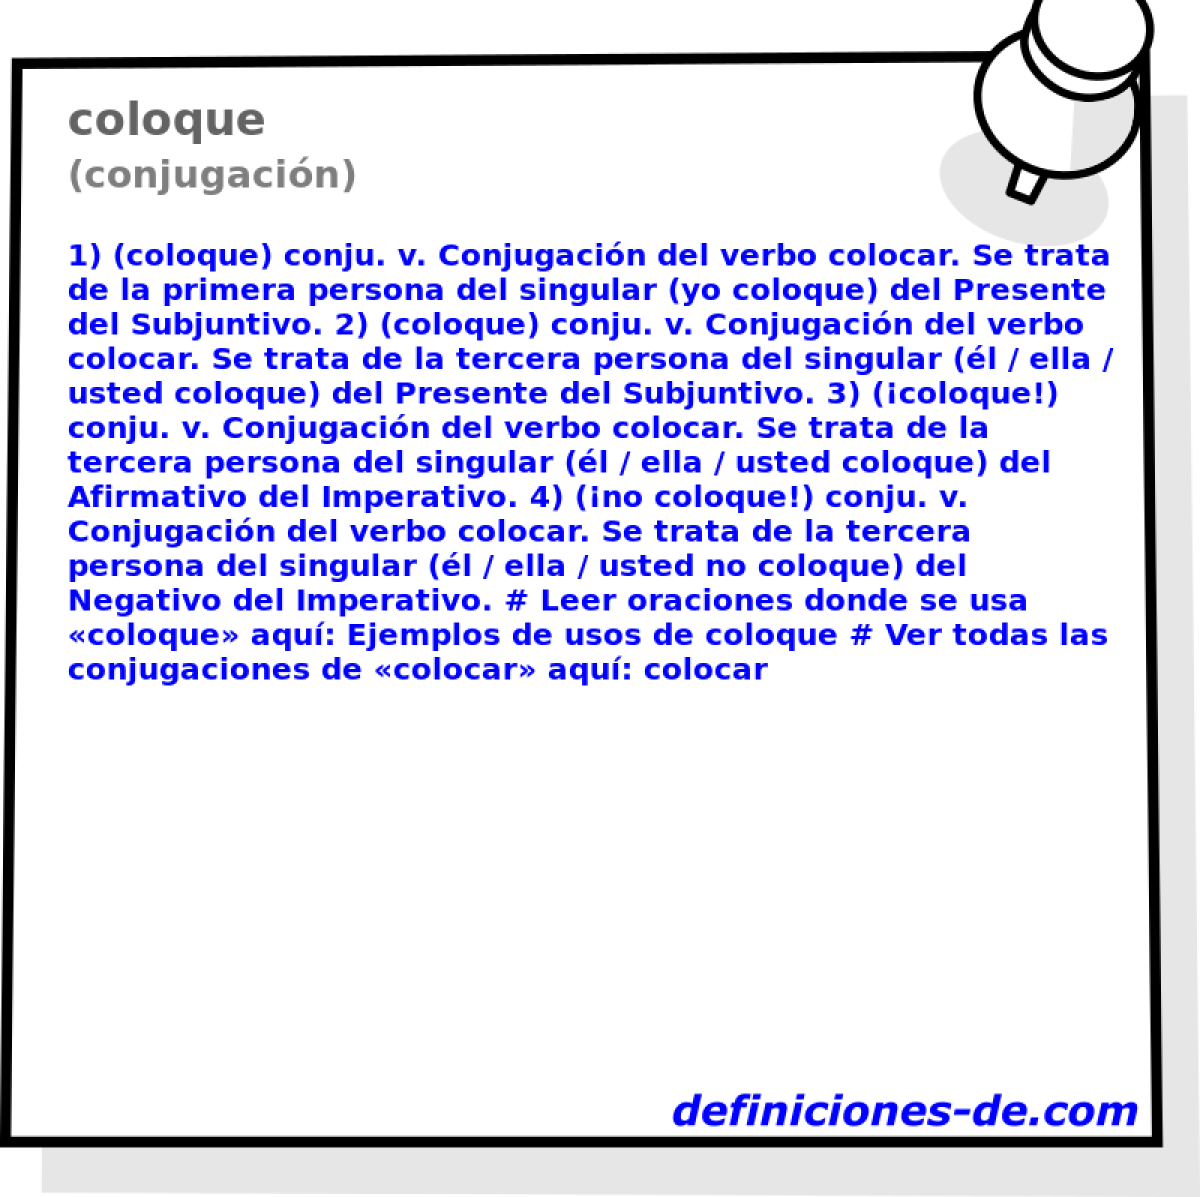 coloque (conjugacin)